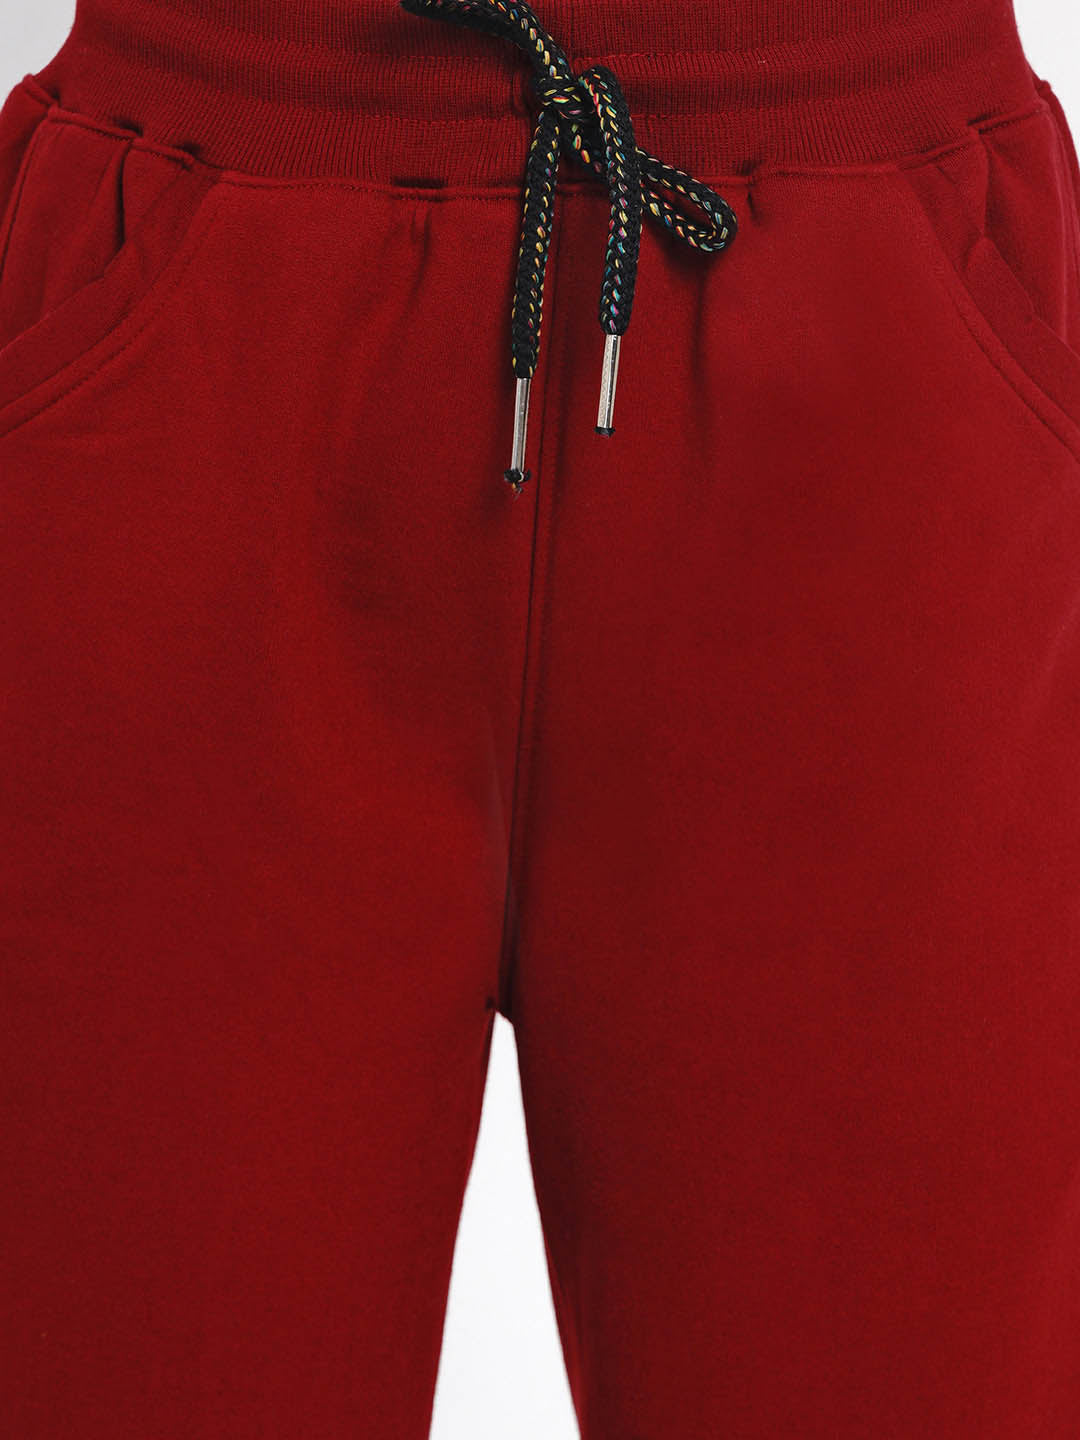 Red Fleece Solid Winter Track Pants